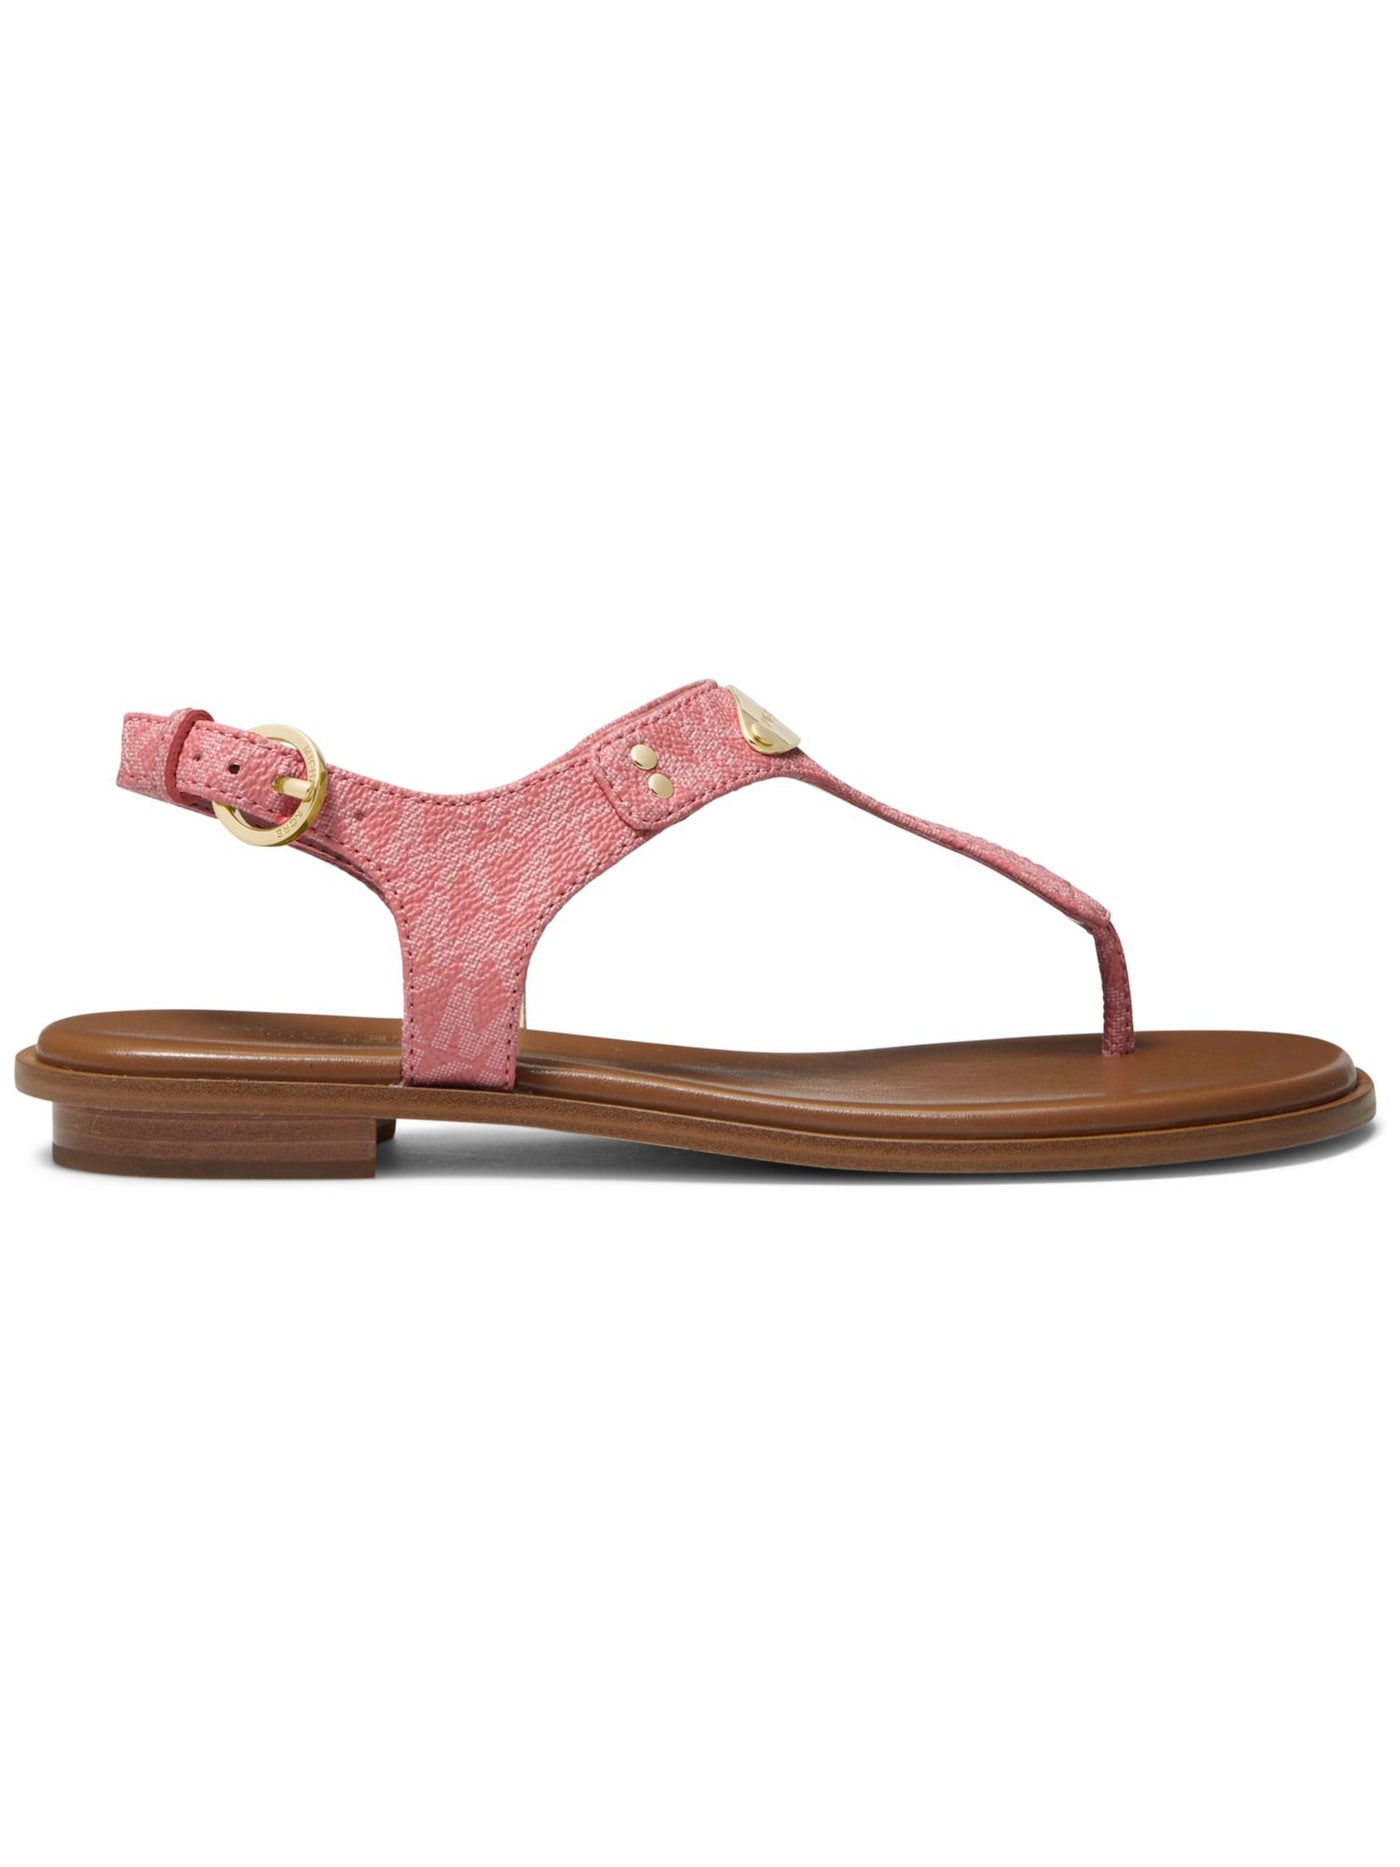 MICHAEL KORS Womens Pink Metallic Plate Hardware Detail Tea Rose Round Toe Buckle Thong Sandals 7.5 M